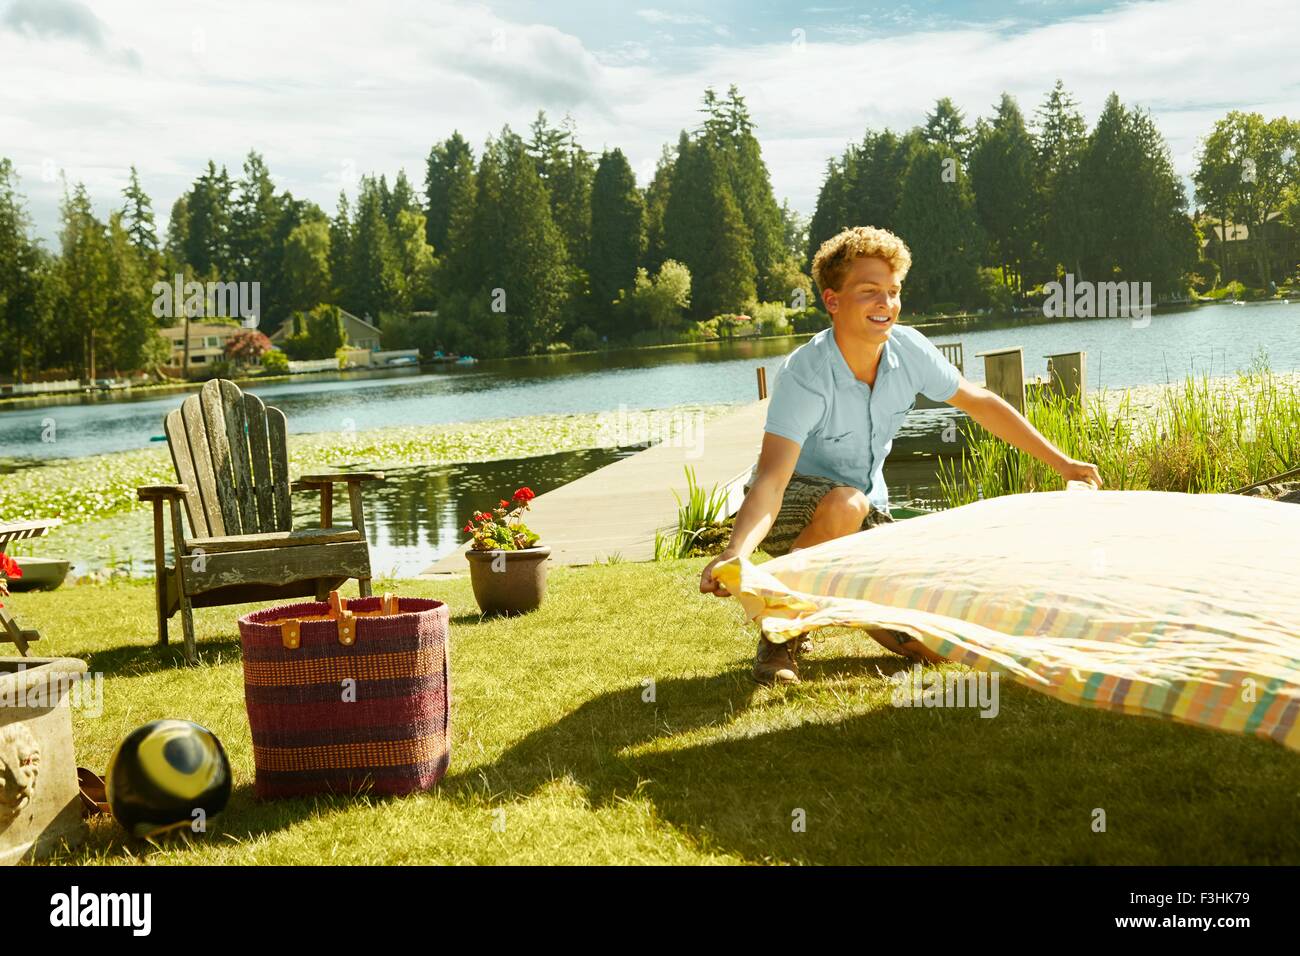 Man laying picnic blanket on grass, lake in background, Seattle, Washington, USA Stock Photo